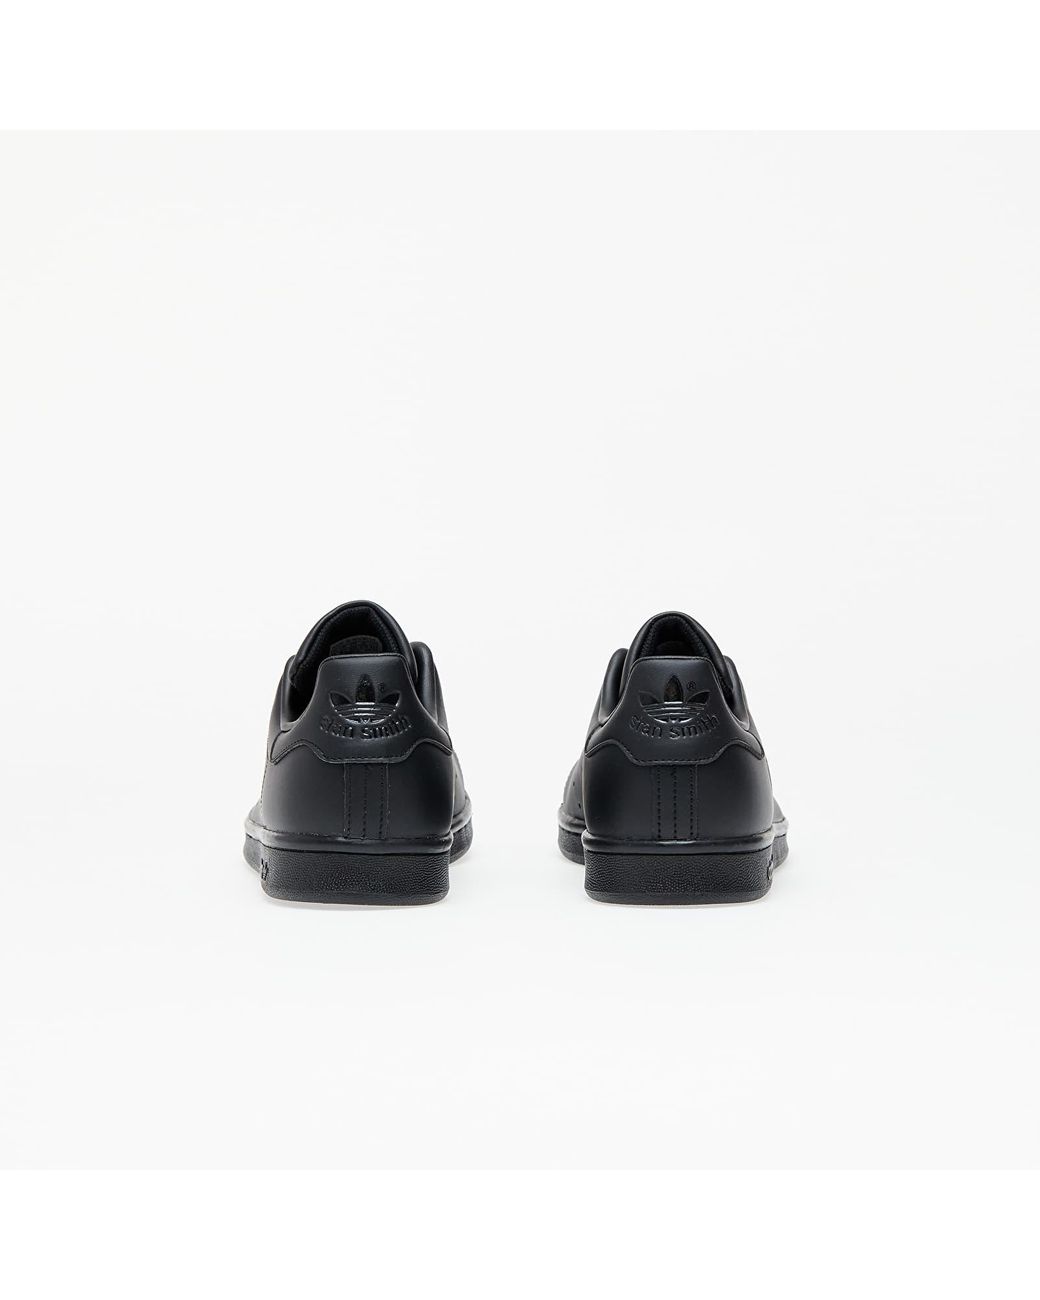 adidas Originals Black Adidas Stan Smith Black - US Size: 4.5, 5 & More -  Lyst